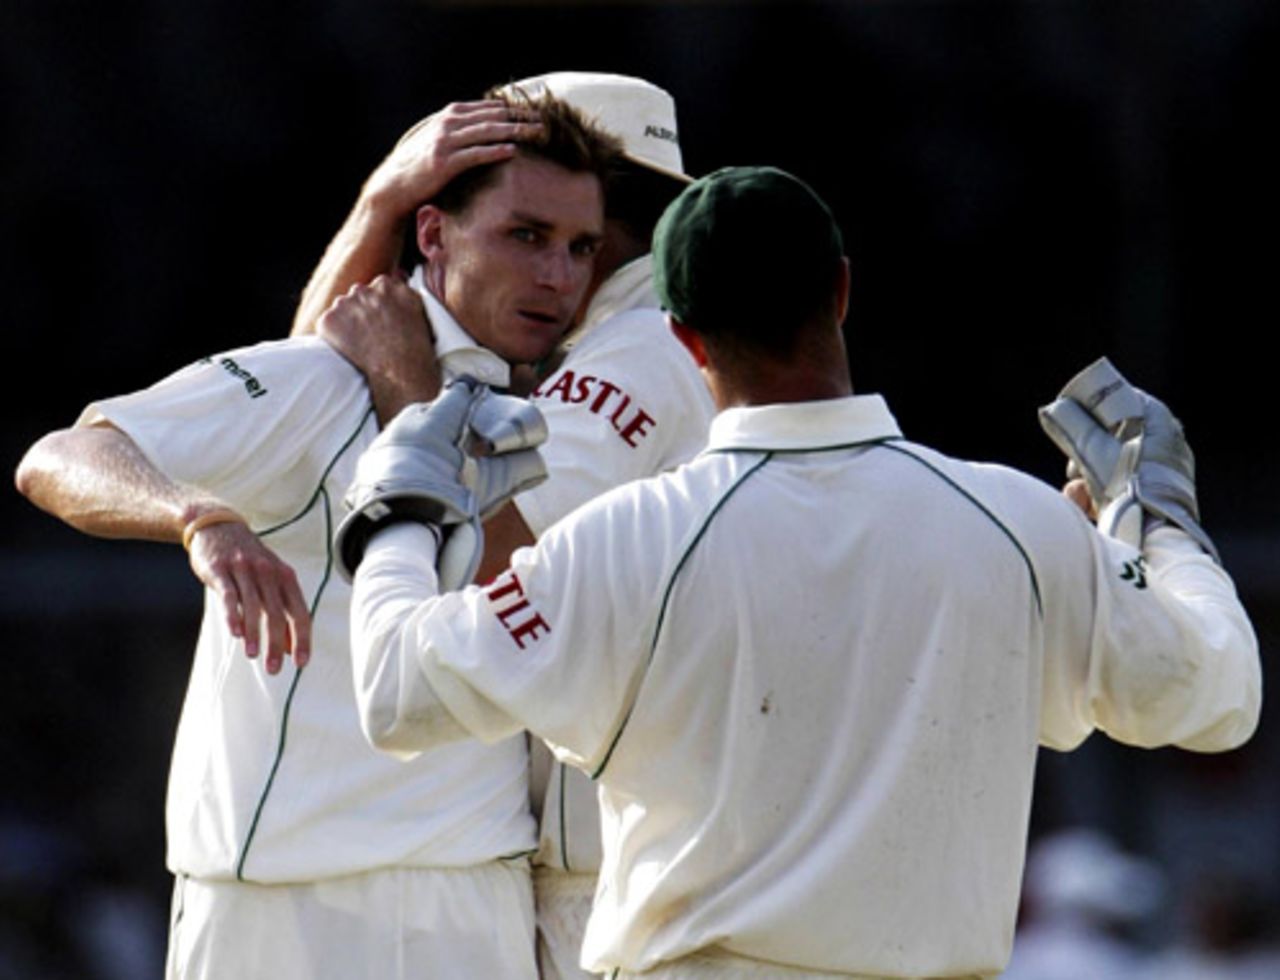 Dale Steyn got rid of Harbhajan Singh, India v South Africa, 3rd Test, Kanpur, 2nd day, April 12, 2008 